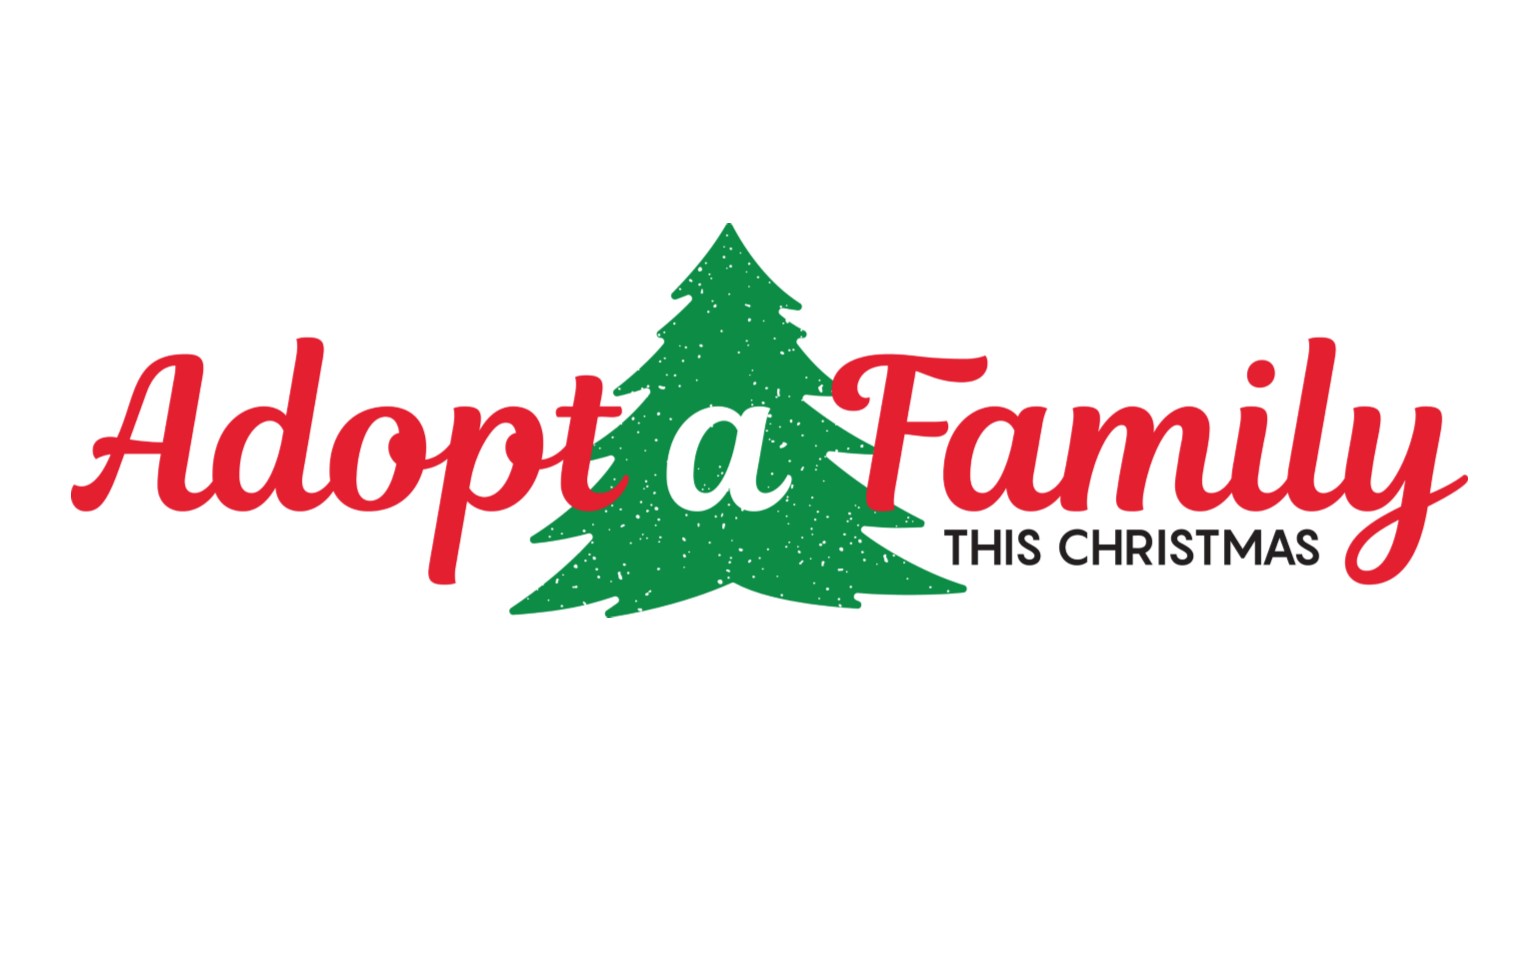 Rushton Elementary Adopt a Family for Christmas